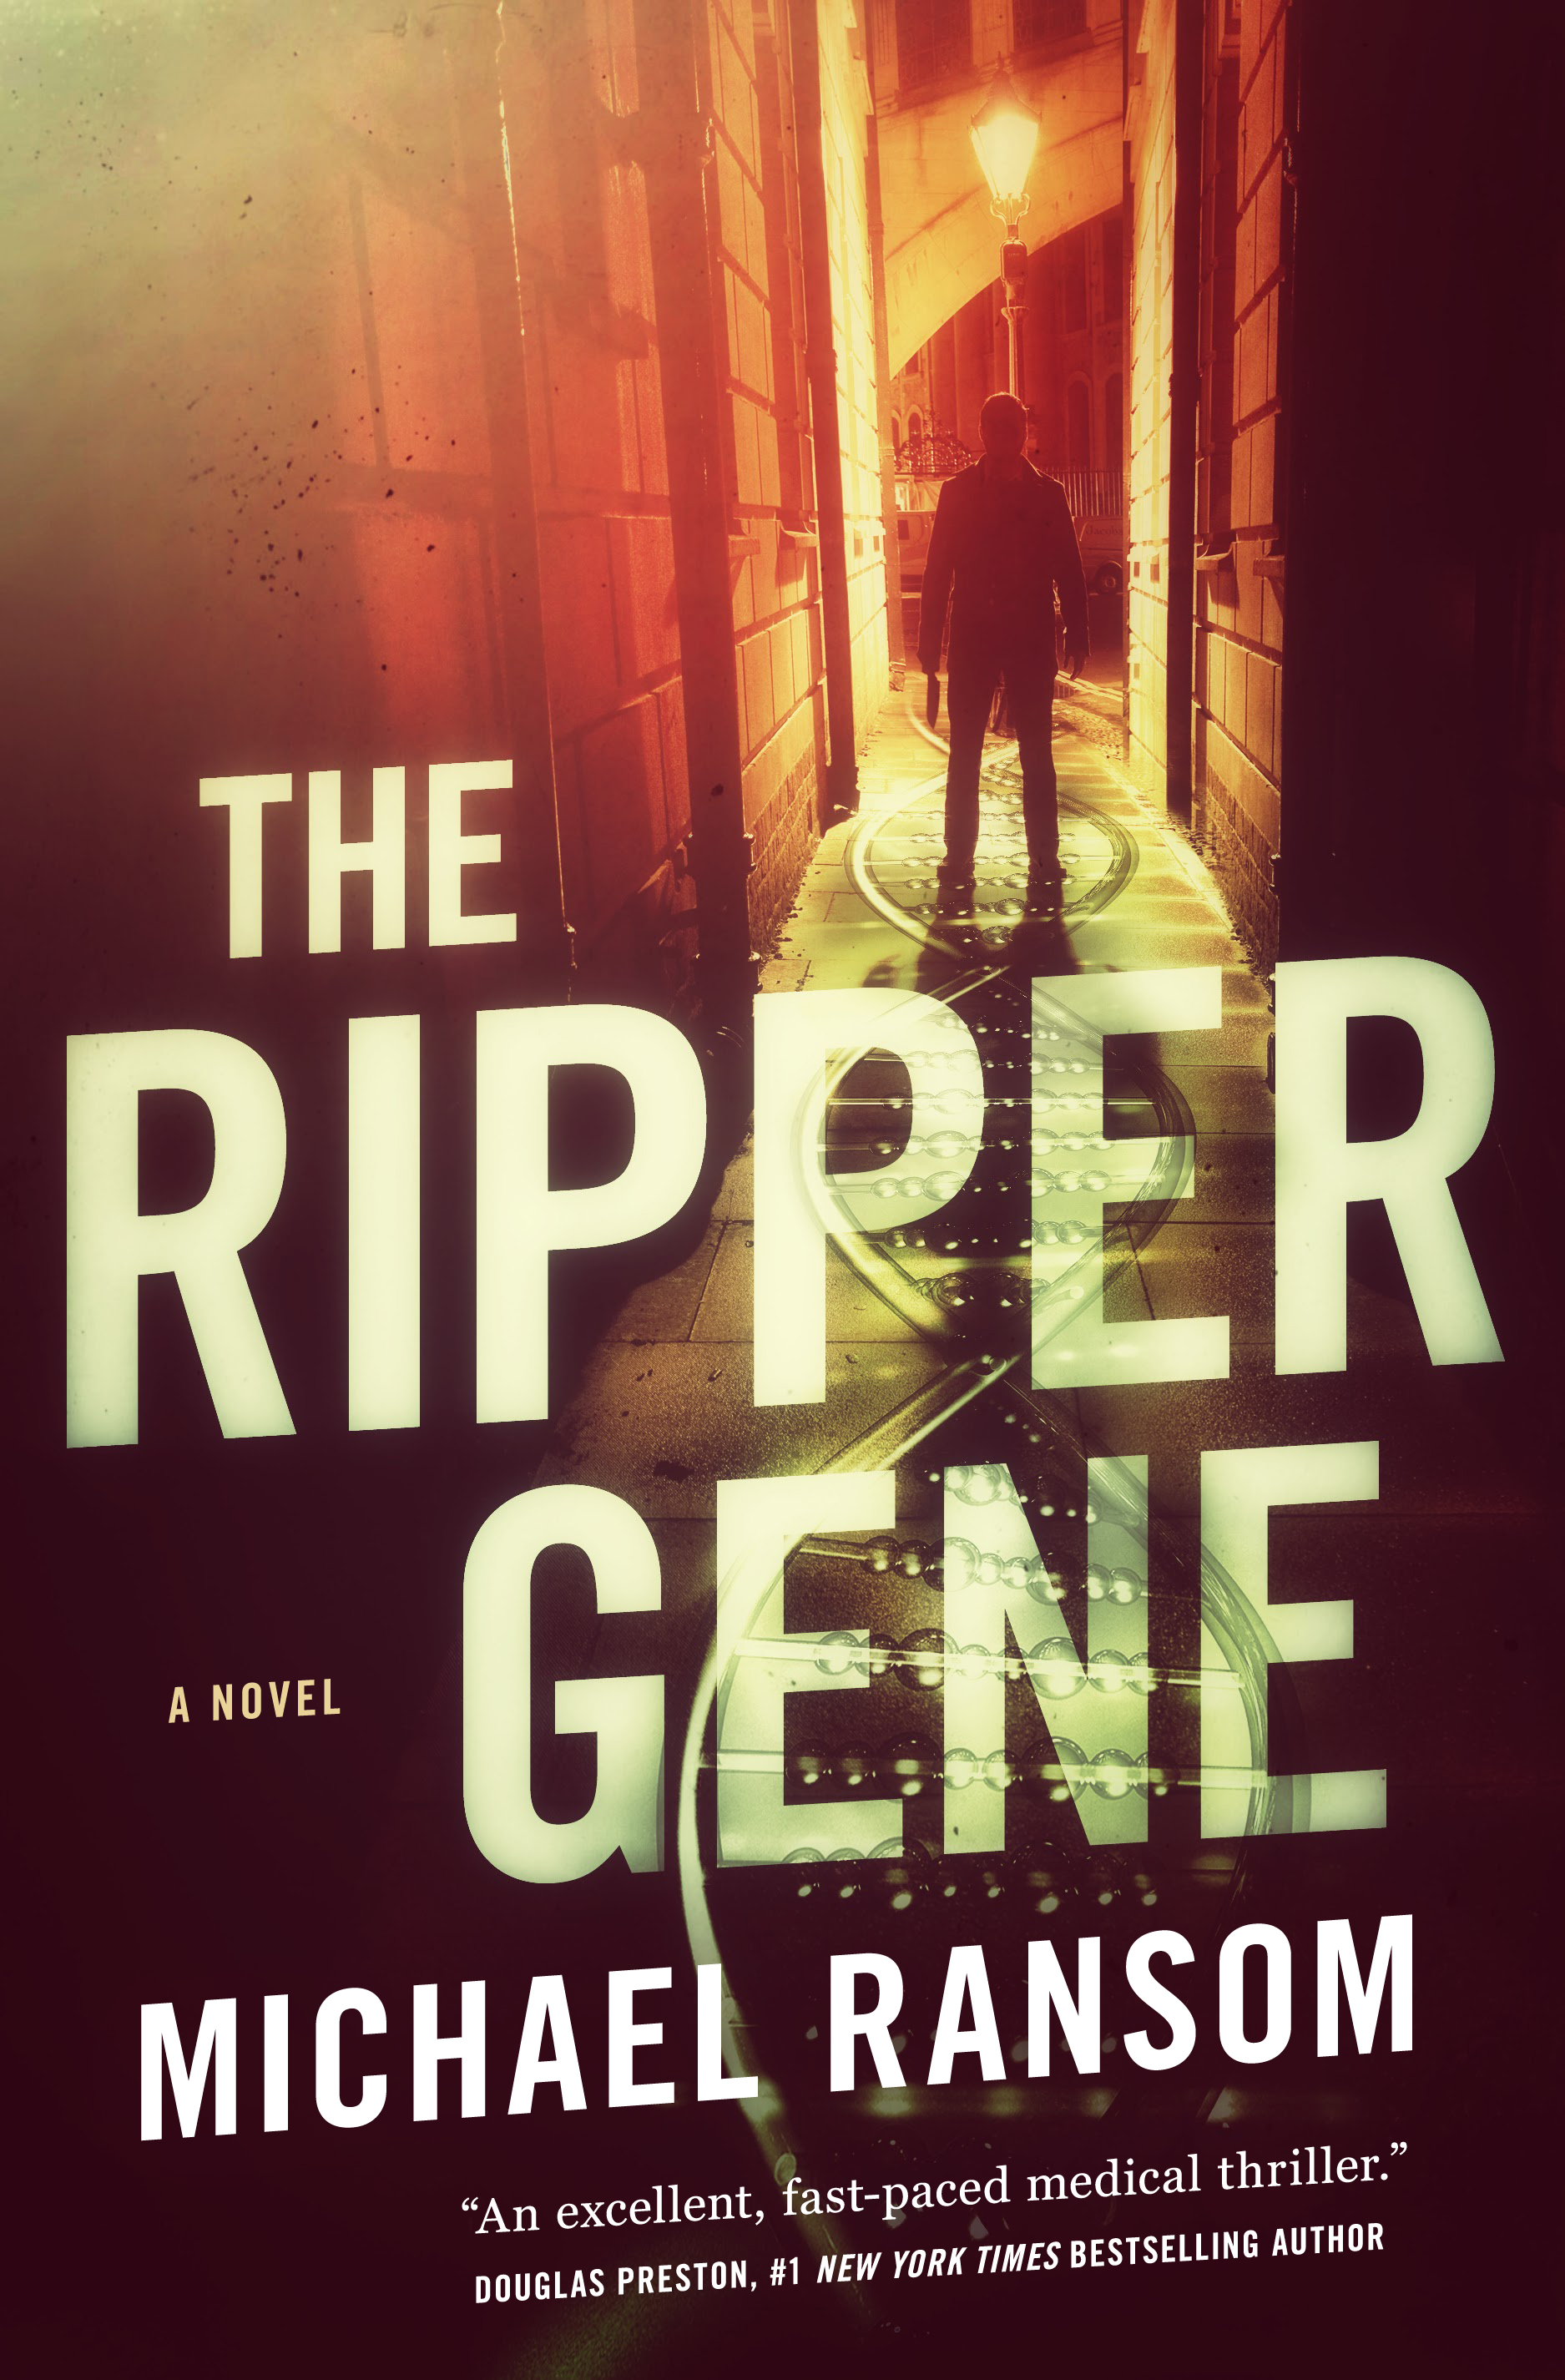 The Ripper Gene : A Novel by Michael Ransom